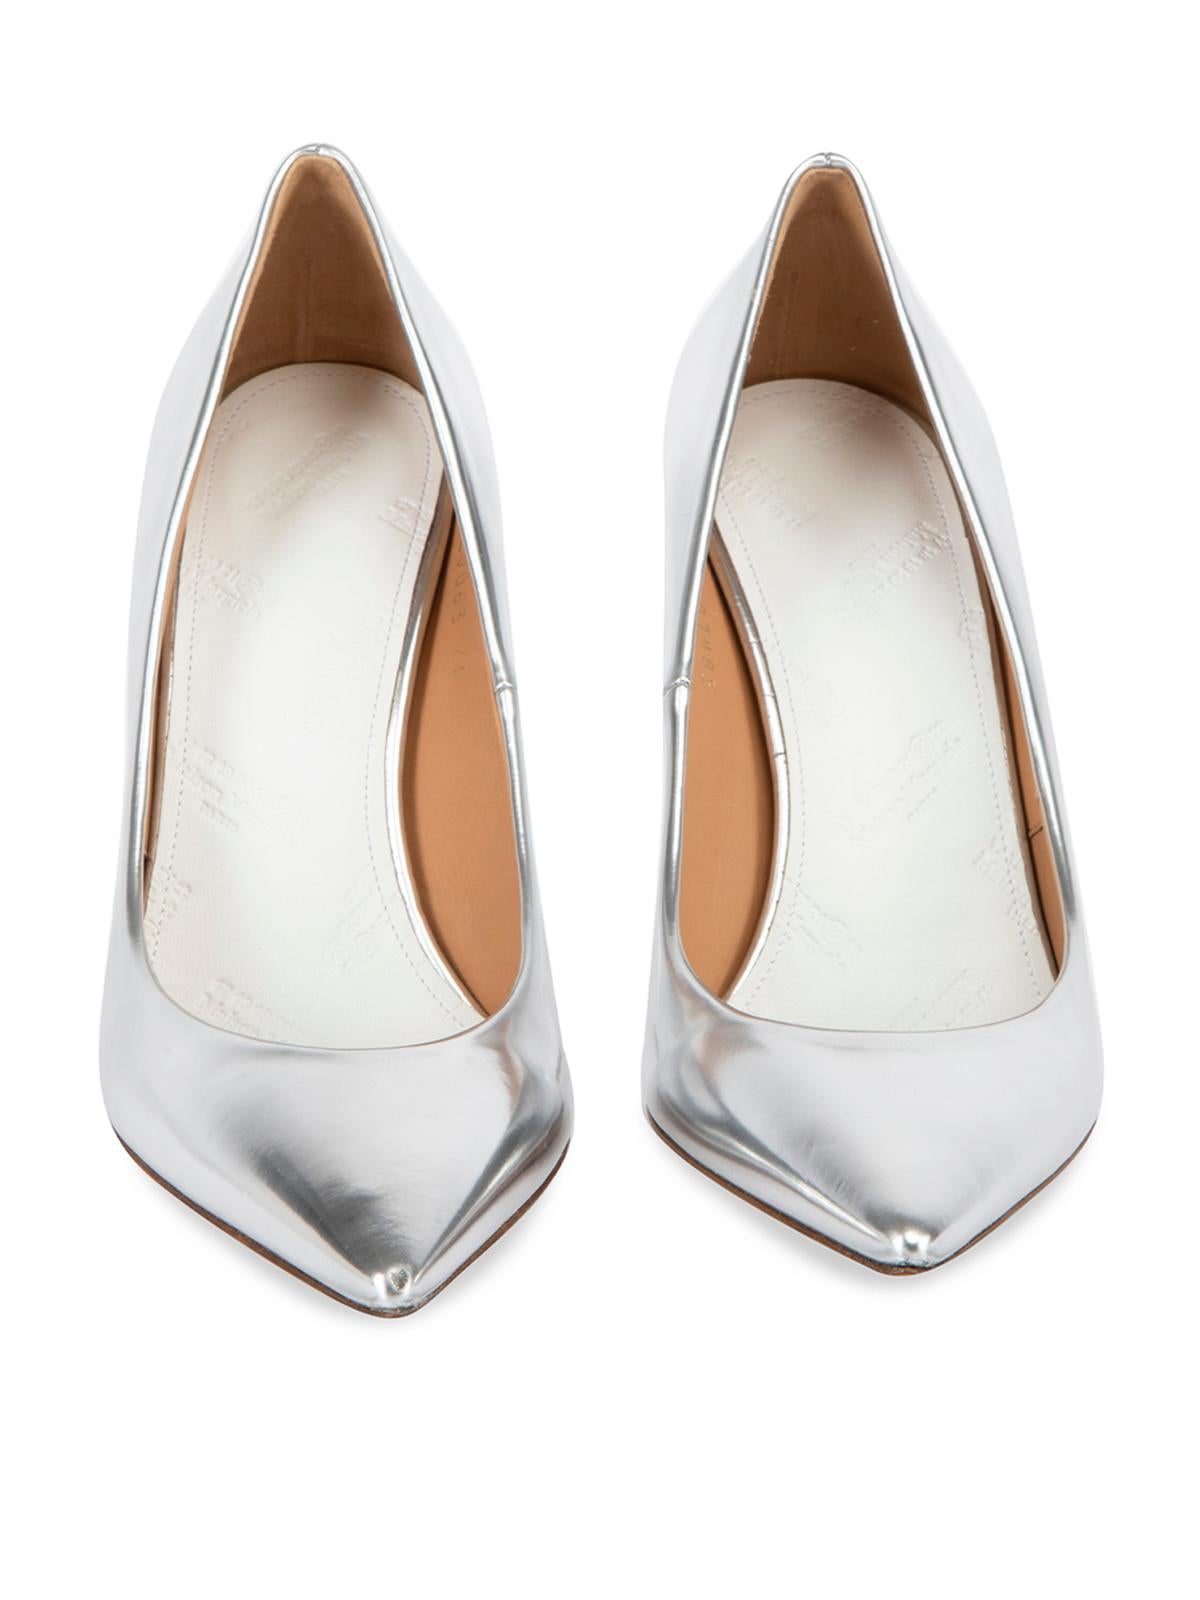 chrome heels